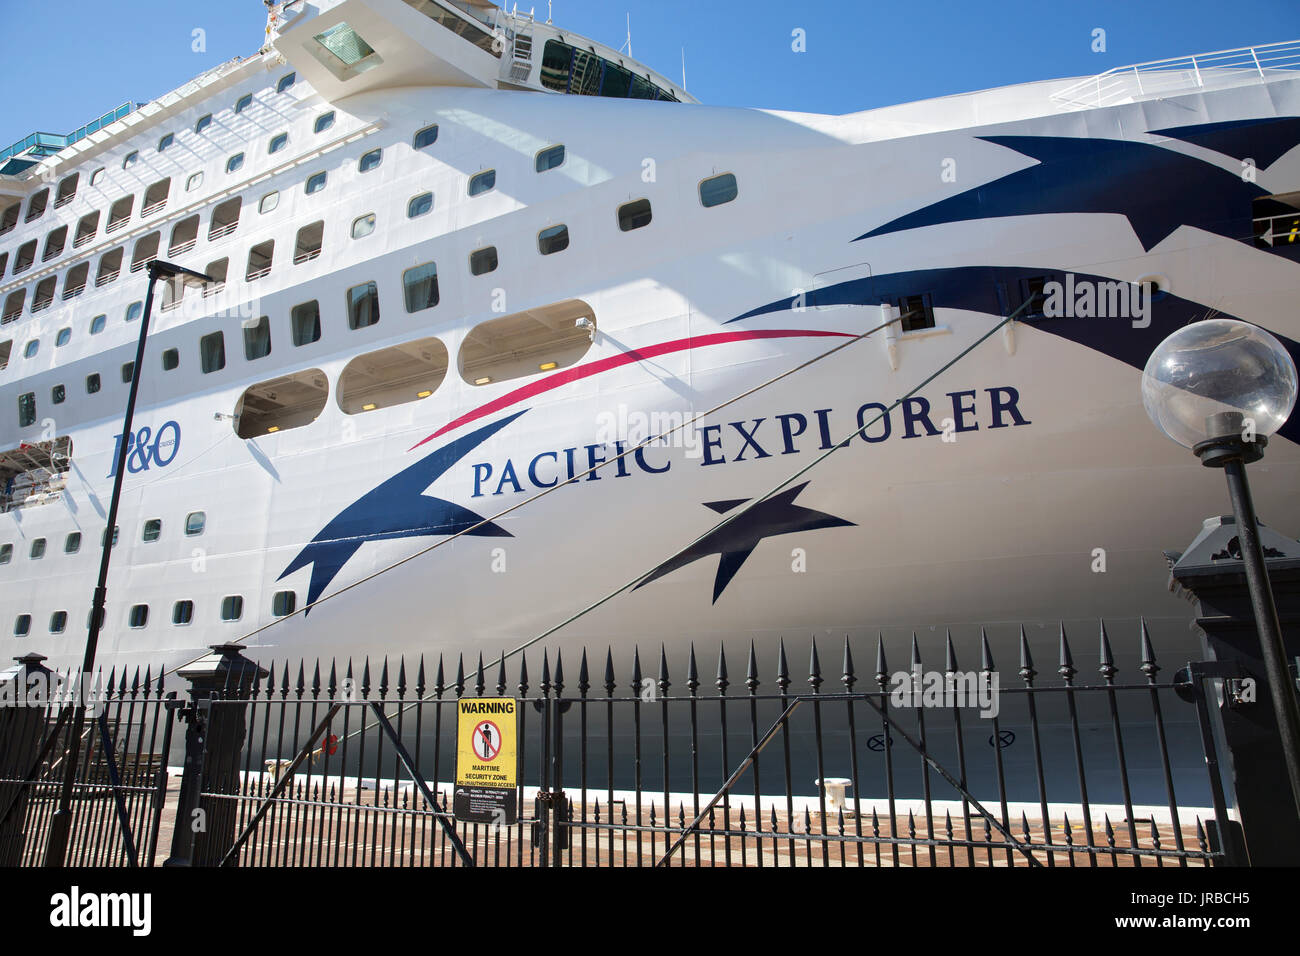 P&O Pacific Explorer cruise ship liner at Overseas passenger terminal in Circular Quay, Sydney, Australia Stock Photo